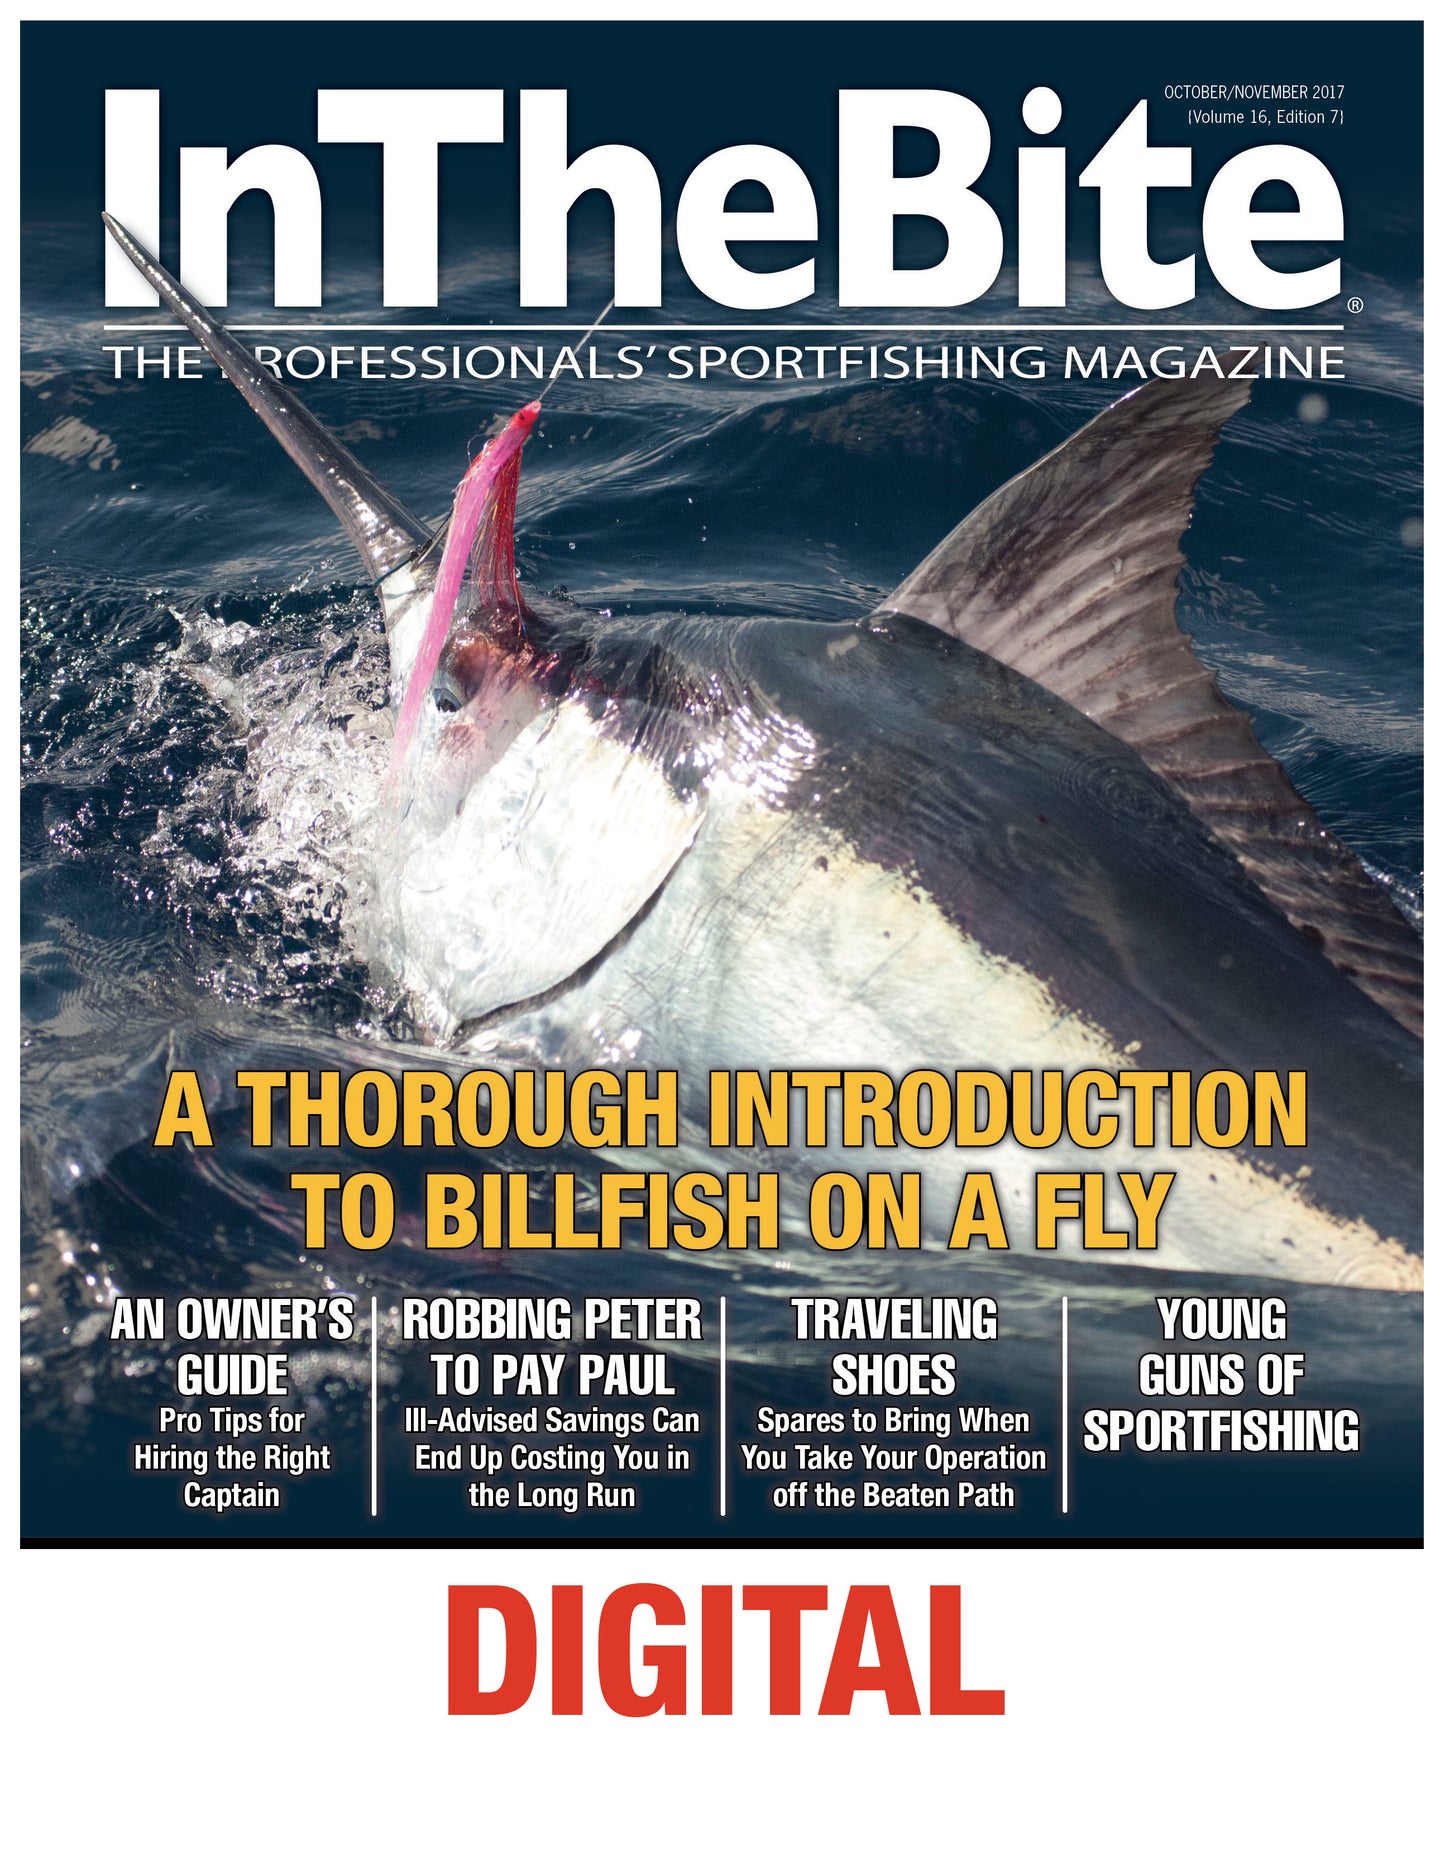 InTheBite Volume 16 Edition 07 - October/November 2017 - Digital Edition